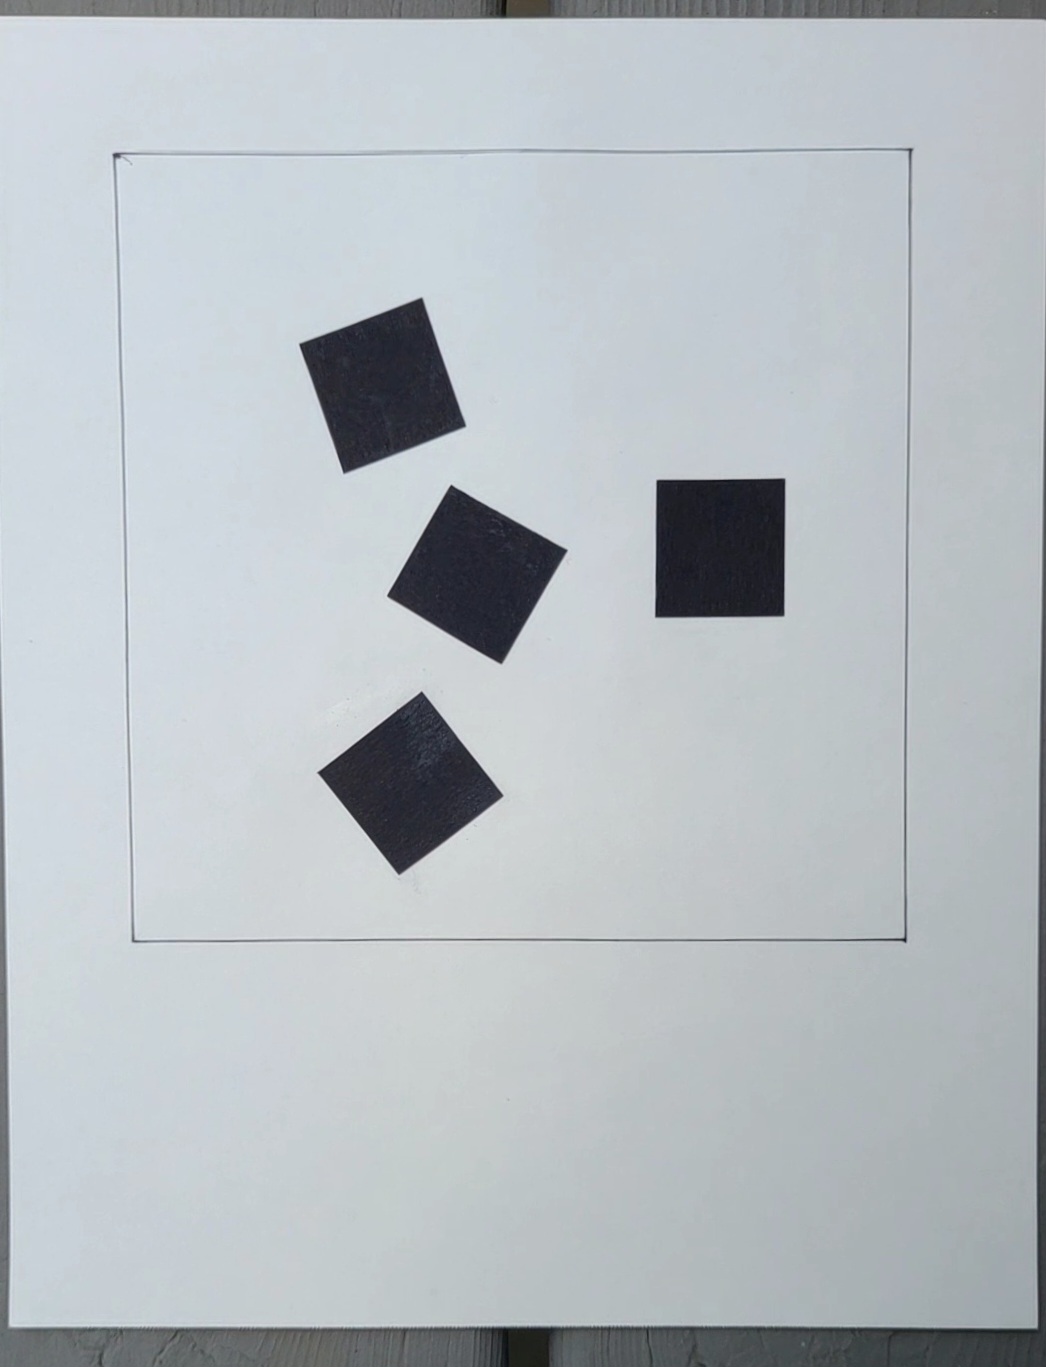 Random looking order of squares